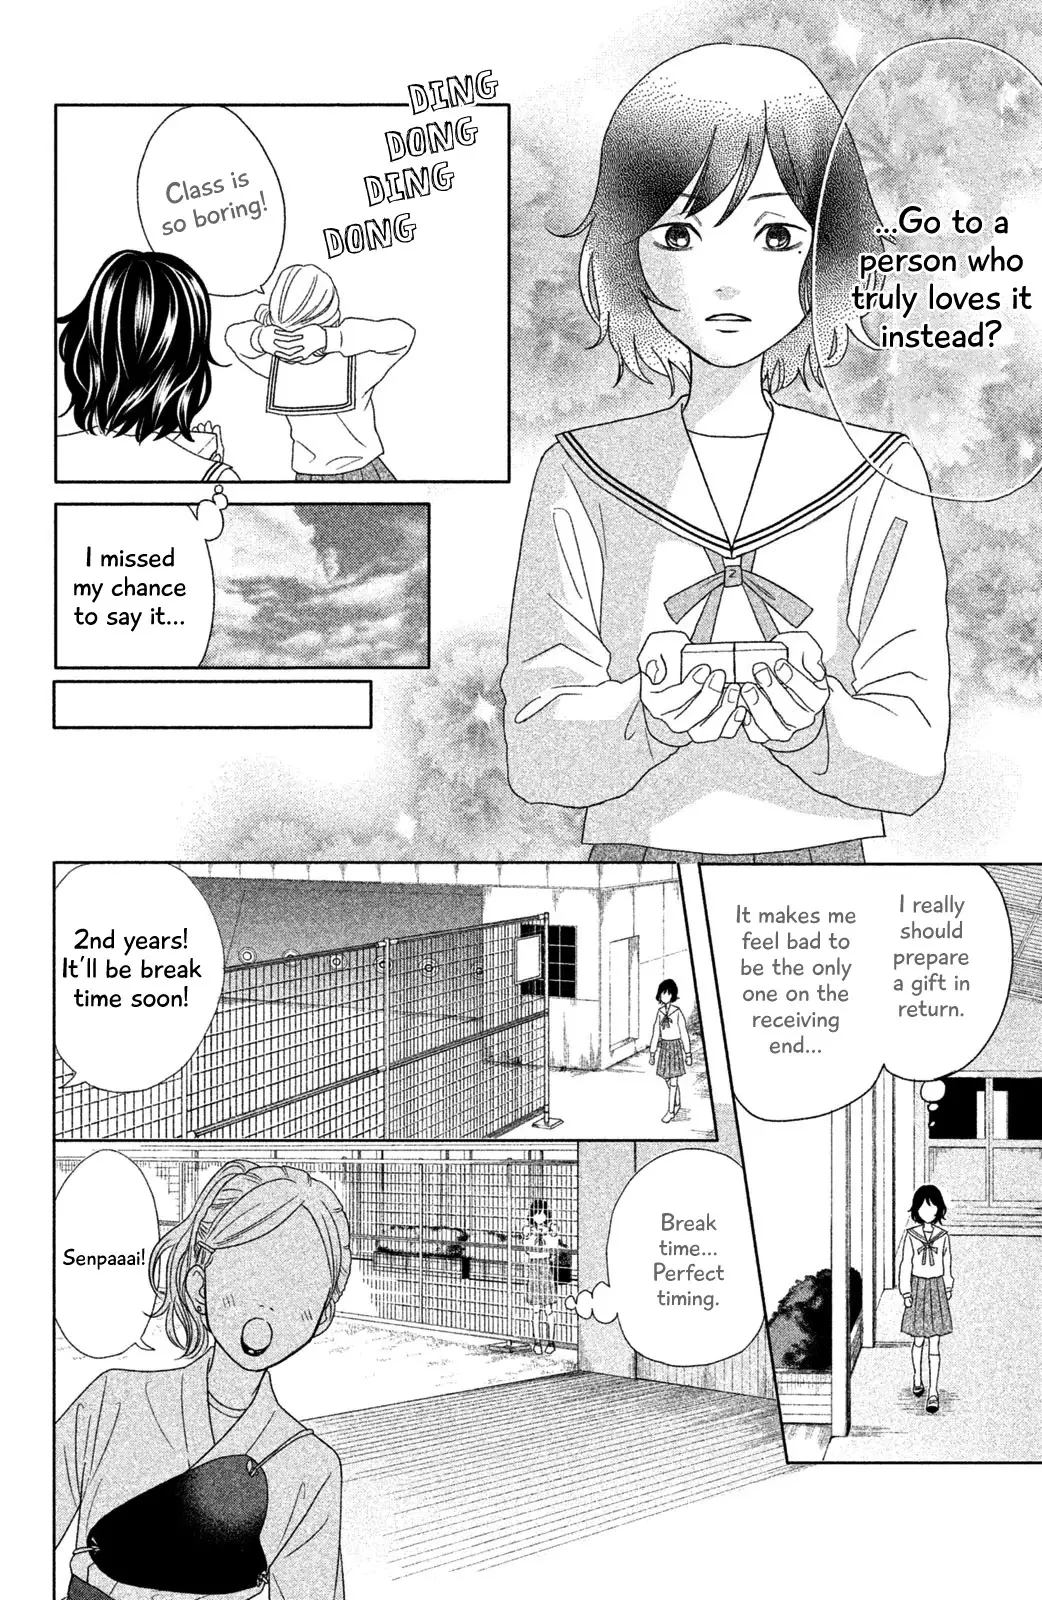 Chihayafuru: Middle School Arc - 11 page 9